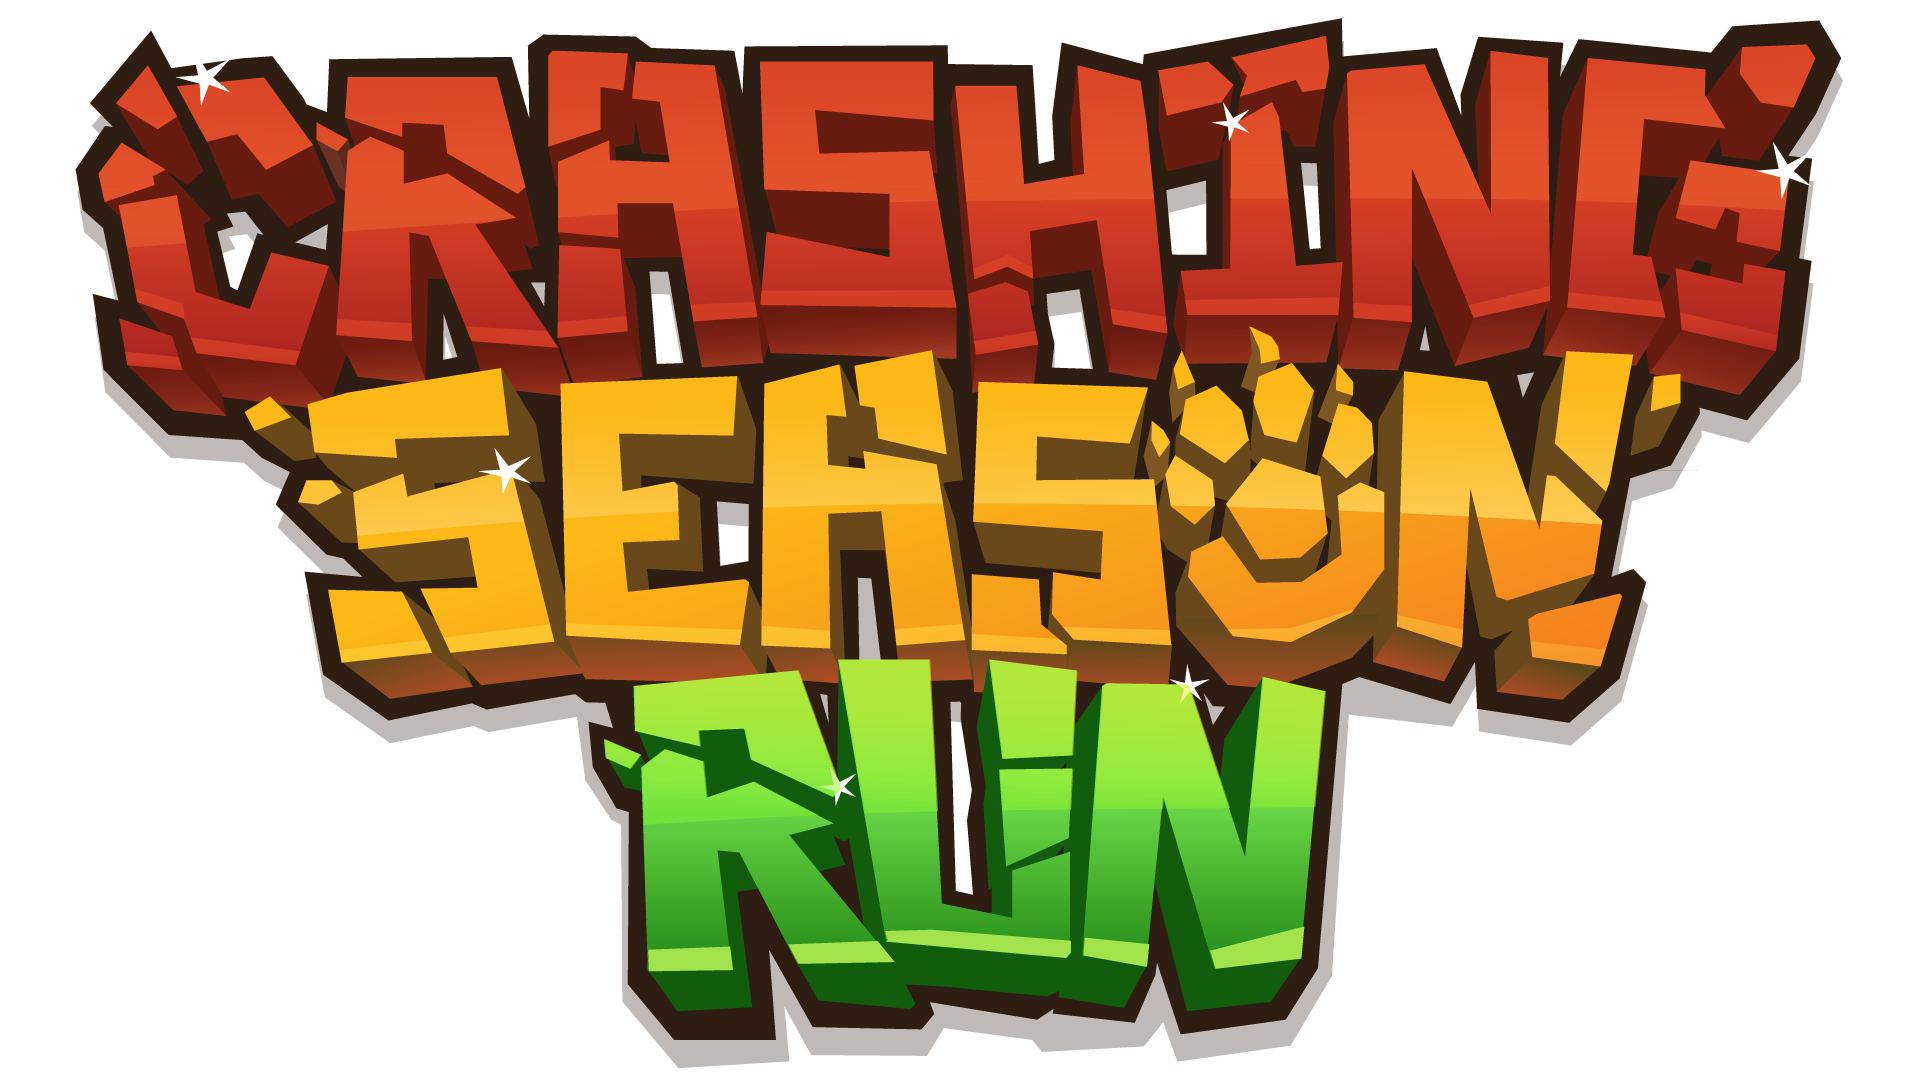 'Crashing Season: Run' Is an Upcoming Sequel to the Entertaining 'Crashing Season'